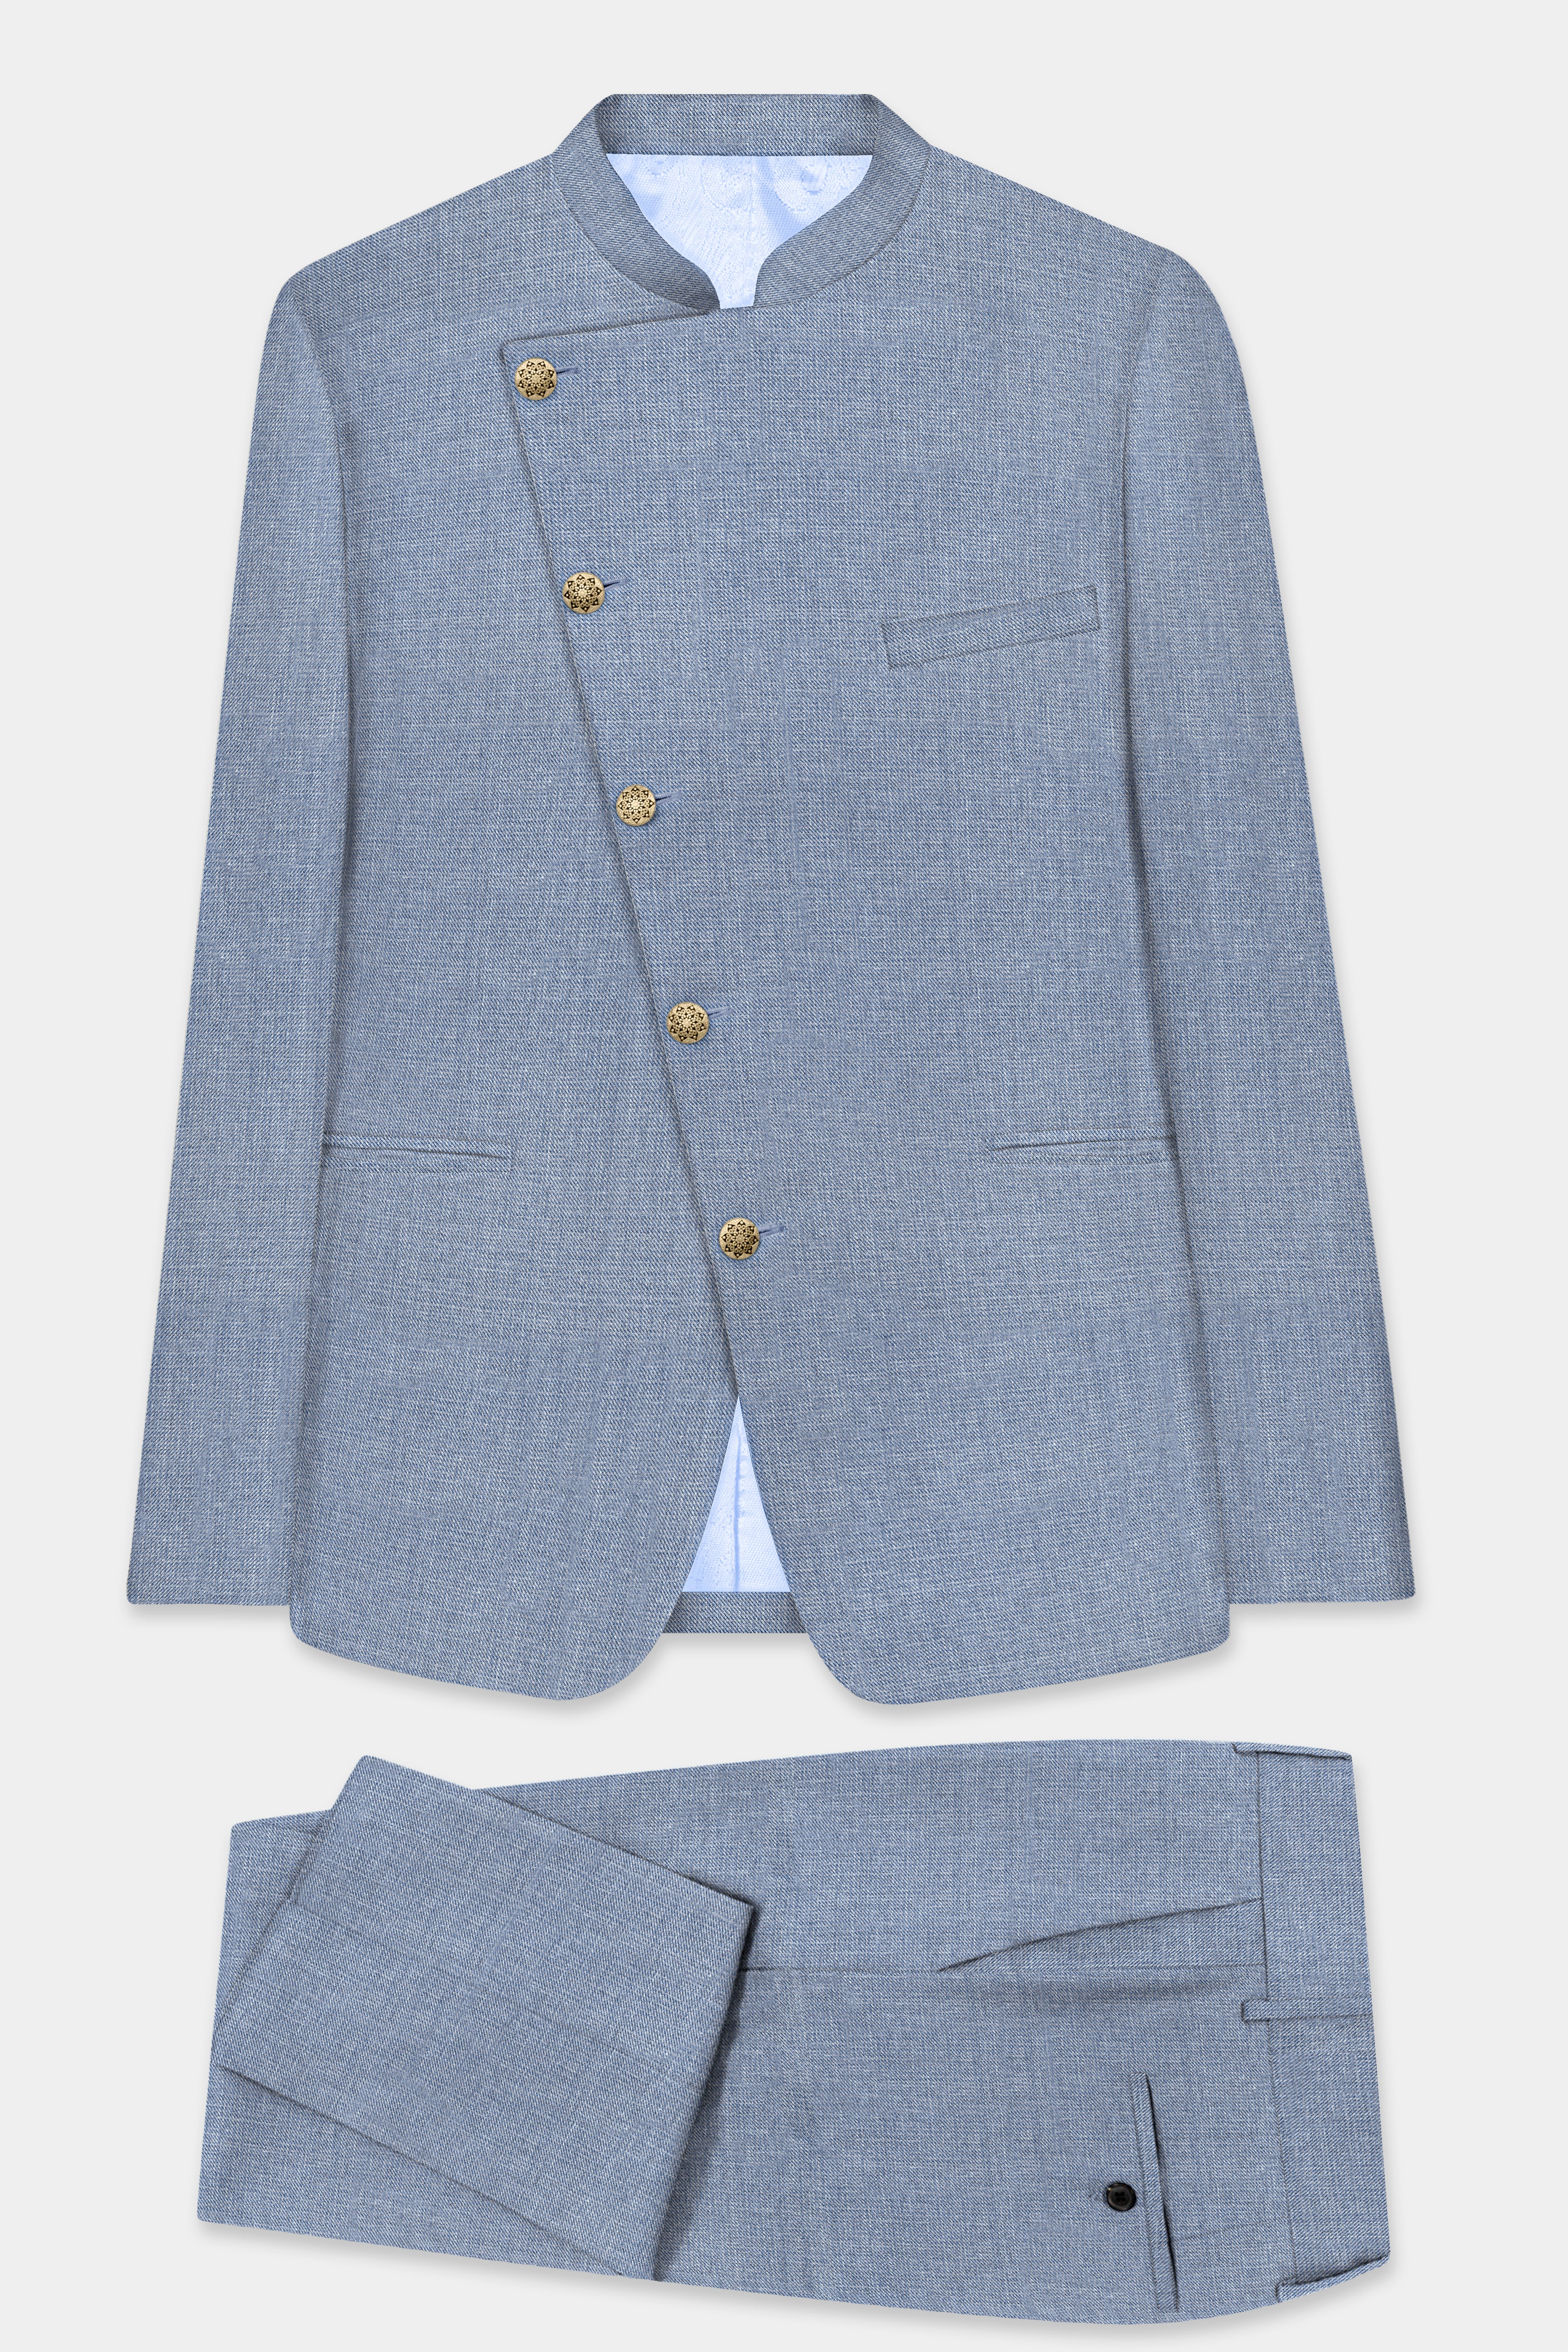 Bluish Windowpane Wool Rich Cross Placket Bandhgala Suit